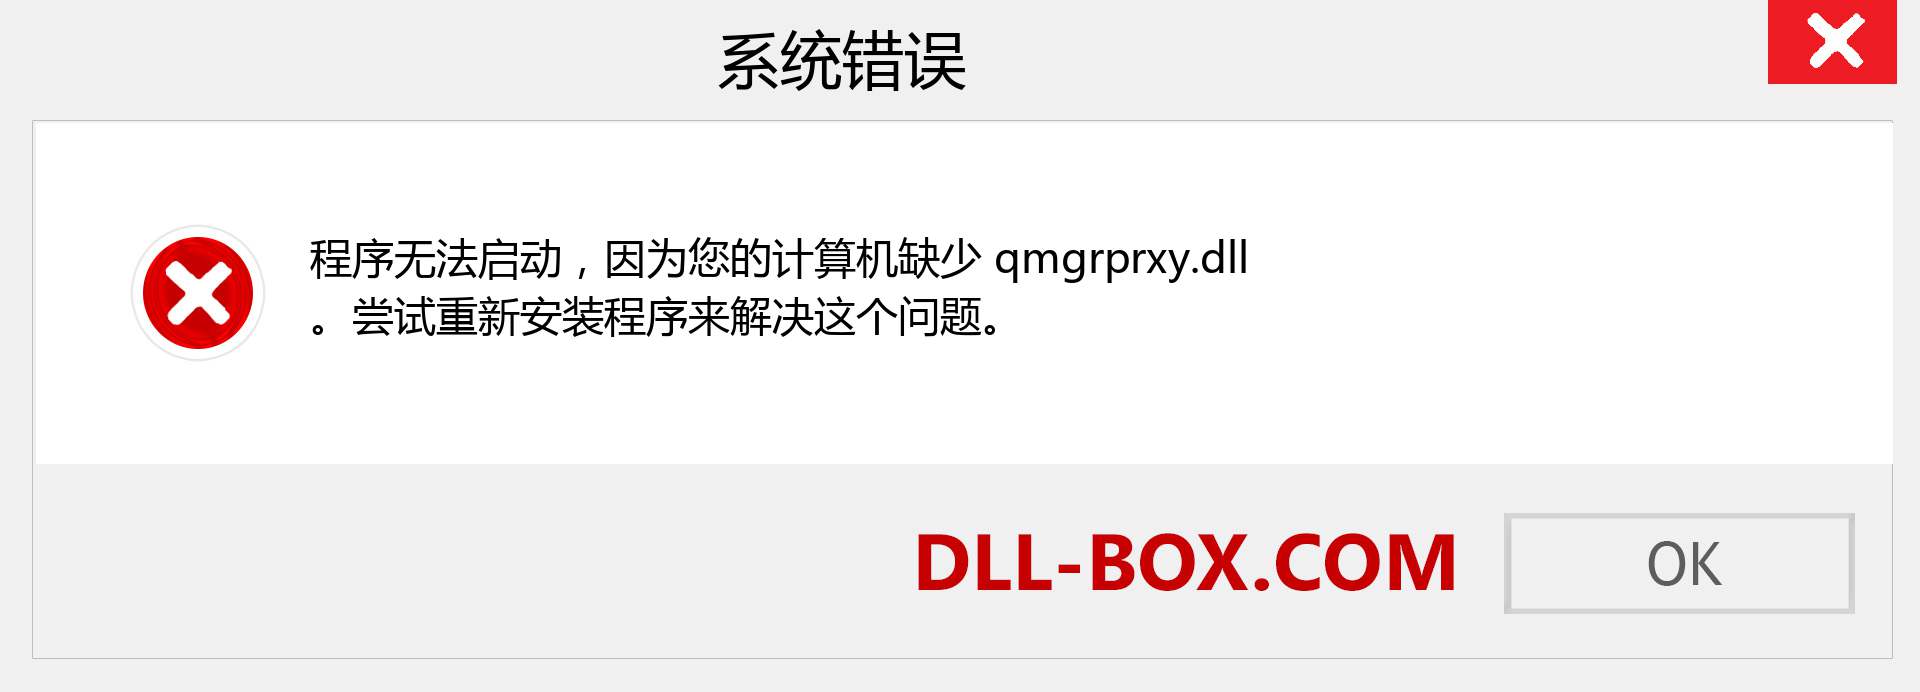 qmgrprxy.dll 文件丢失？。 适用于 Windows 7、8、10 的下载 - 修复 Windows、照片、图像上的 qmgrprxy dll 丢失错误